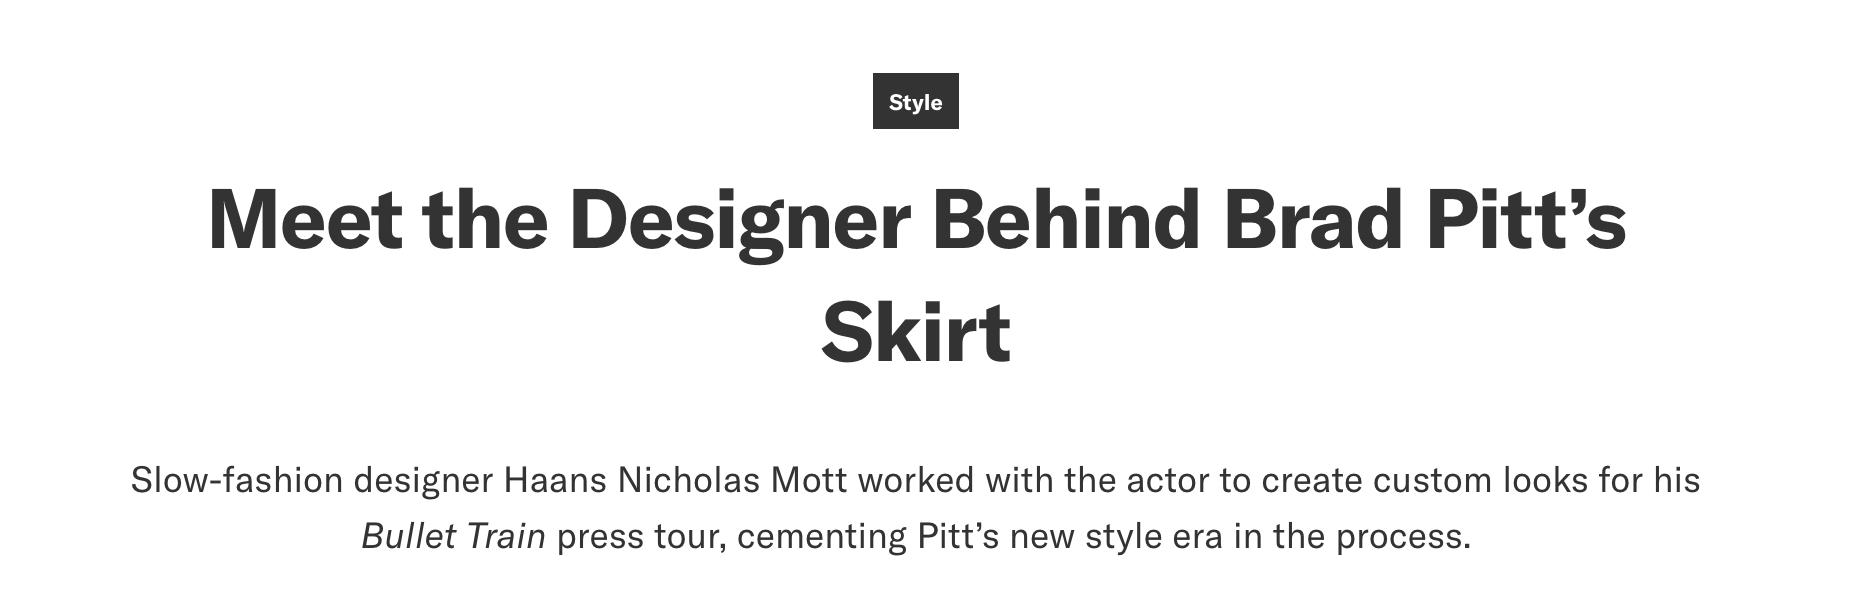 Brad Pitt Looks Smoldering In New Ad • Instinct Magazine